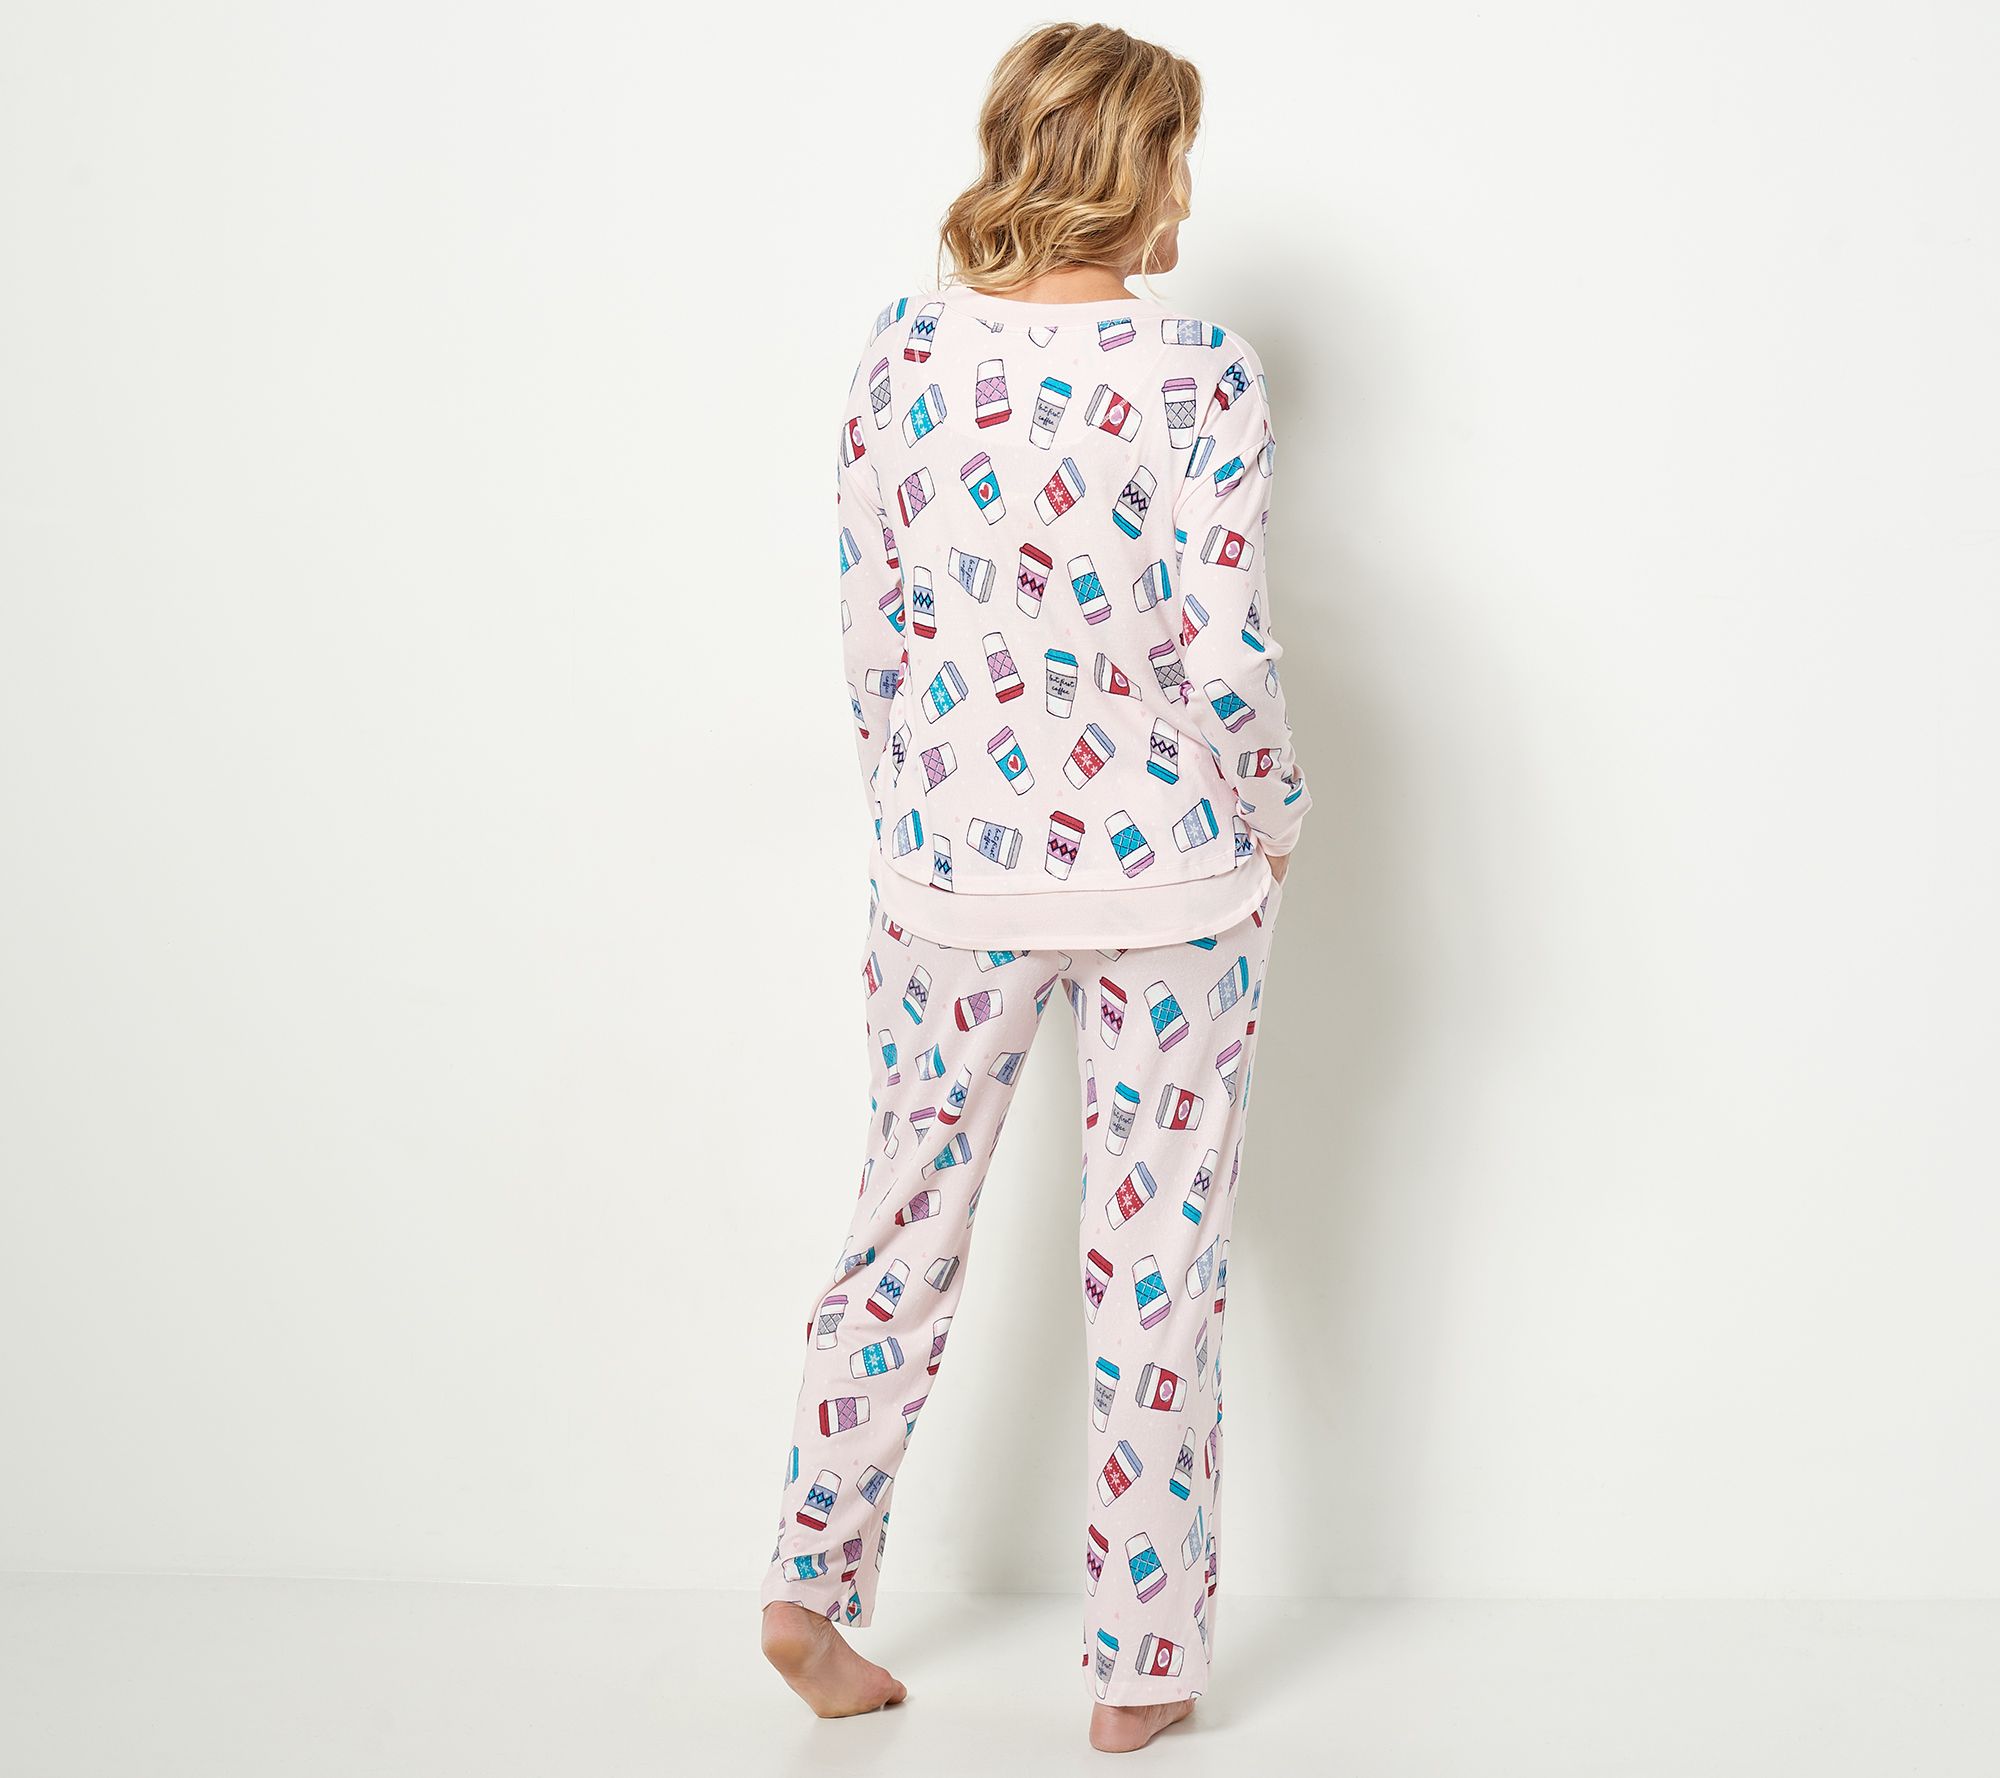 Ladies Novelty Soft Warm Micro Fleece PJ Animal Pyjama By Forever Dreaming